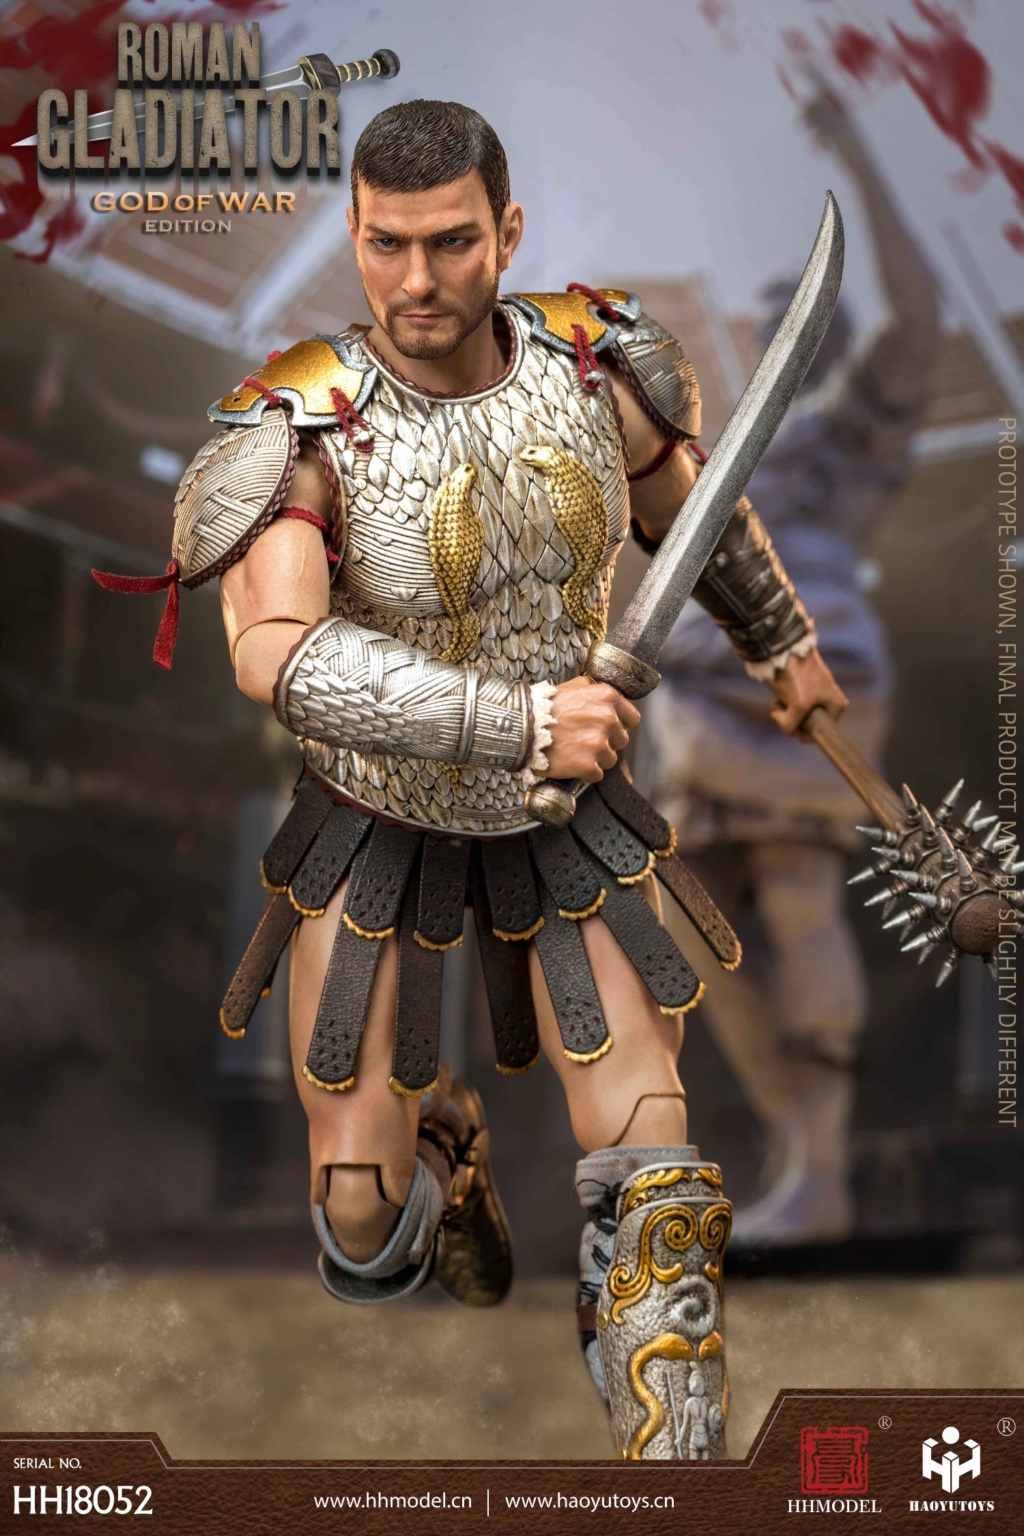 Haoyutoys - NEW PRODUCT: HHMODEL & HAOYUTOYS: 1/6 Imperial Legion Series - Roman Gladiator [God of War Edition] HH18052 & [Hunt Edition] HH18053 20384511